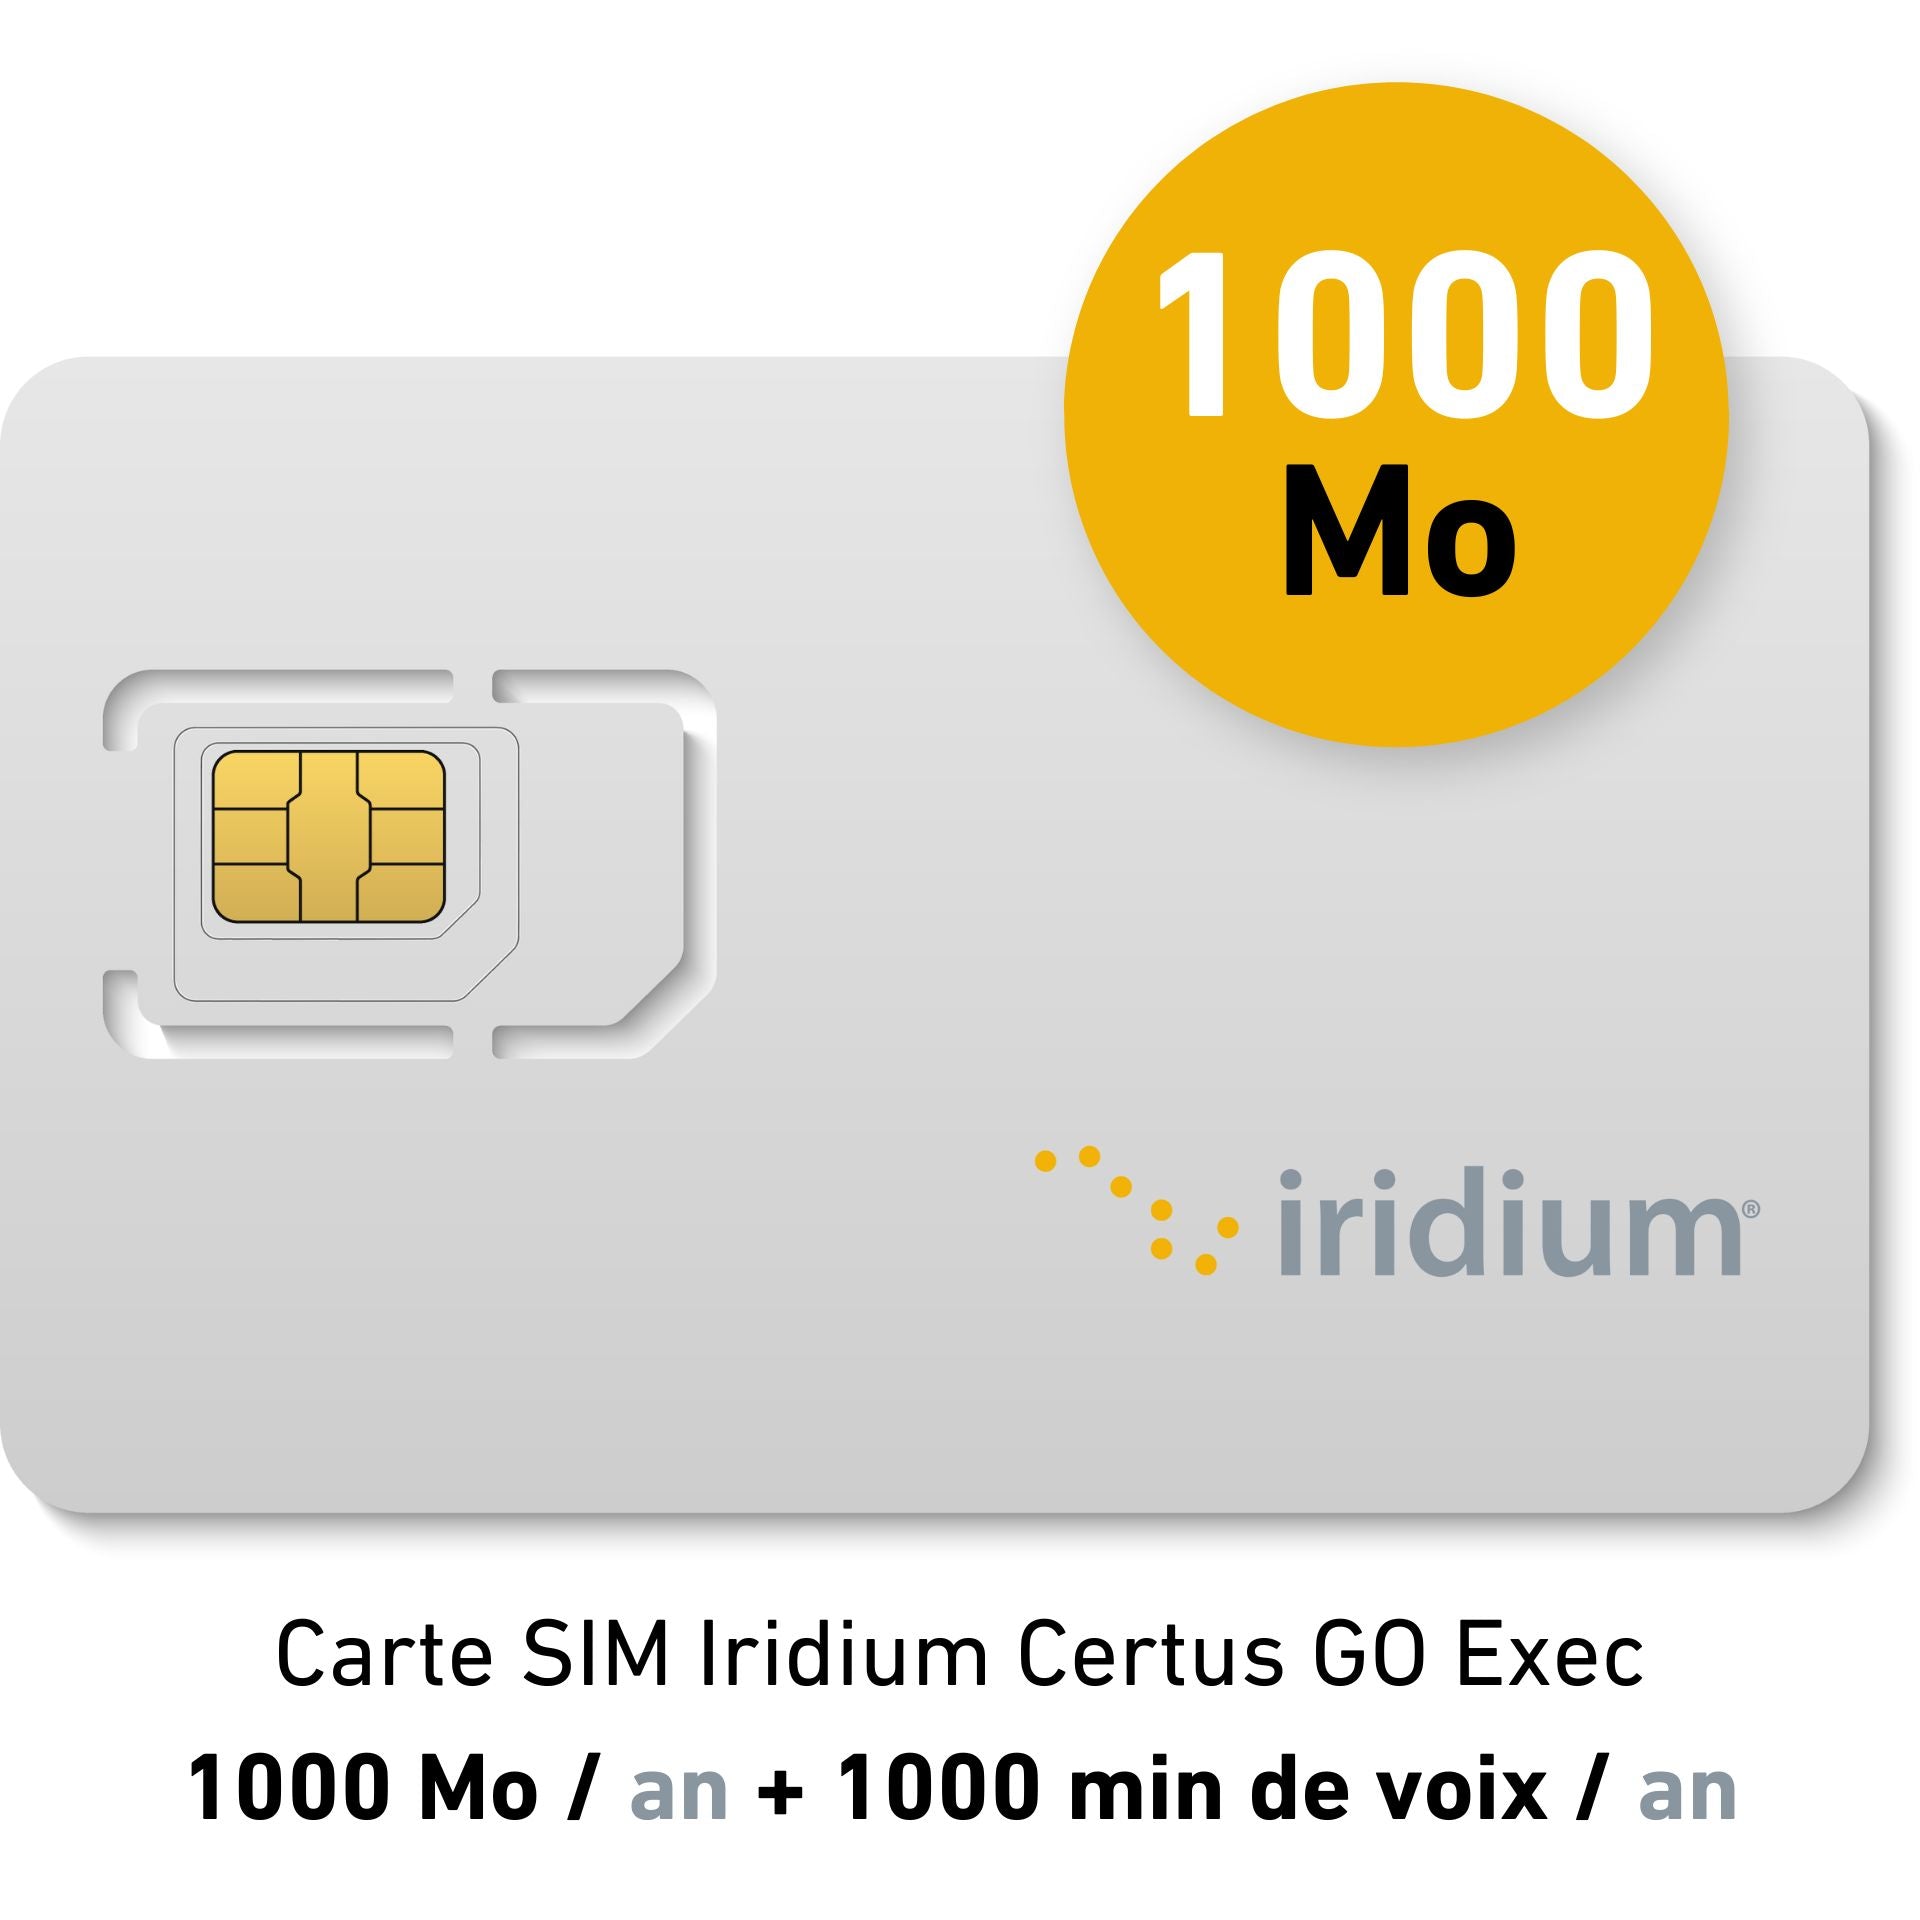 Iridium Certus GO Exec Annual Yachting Subscription - 1000MB/year + 1000 min voice/year